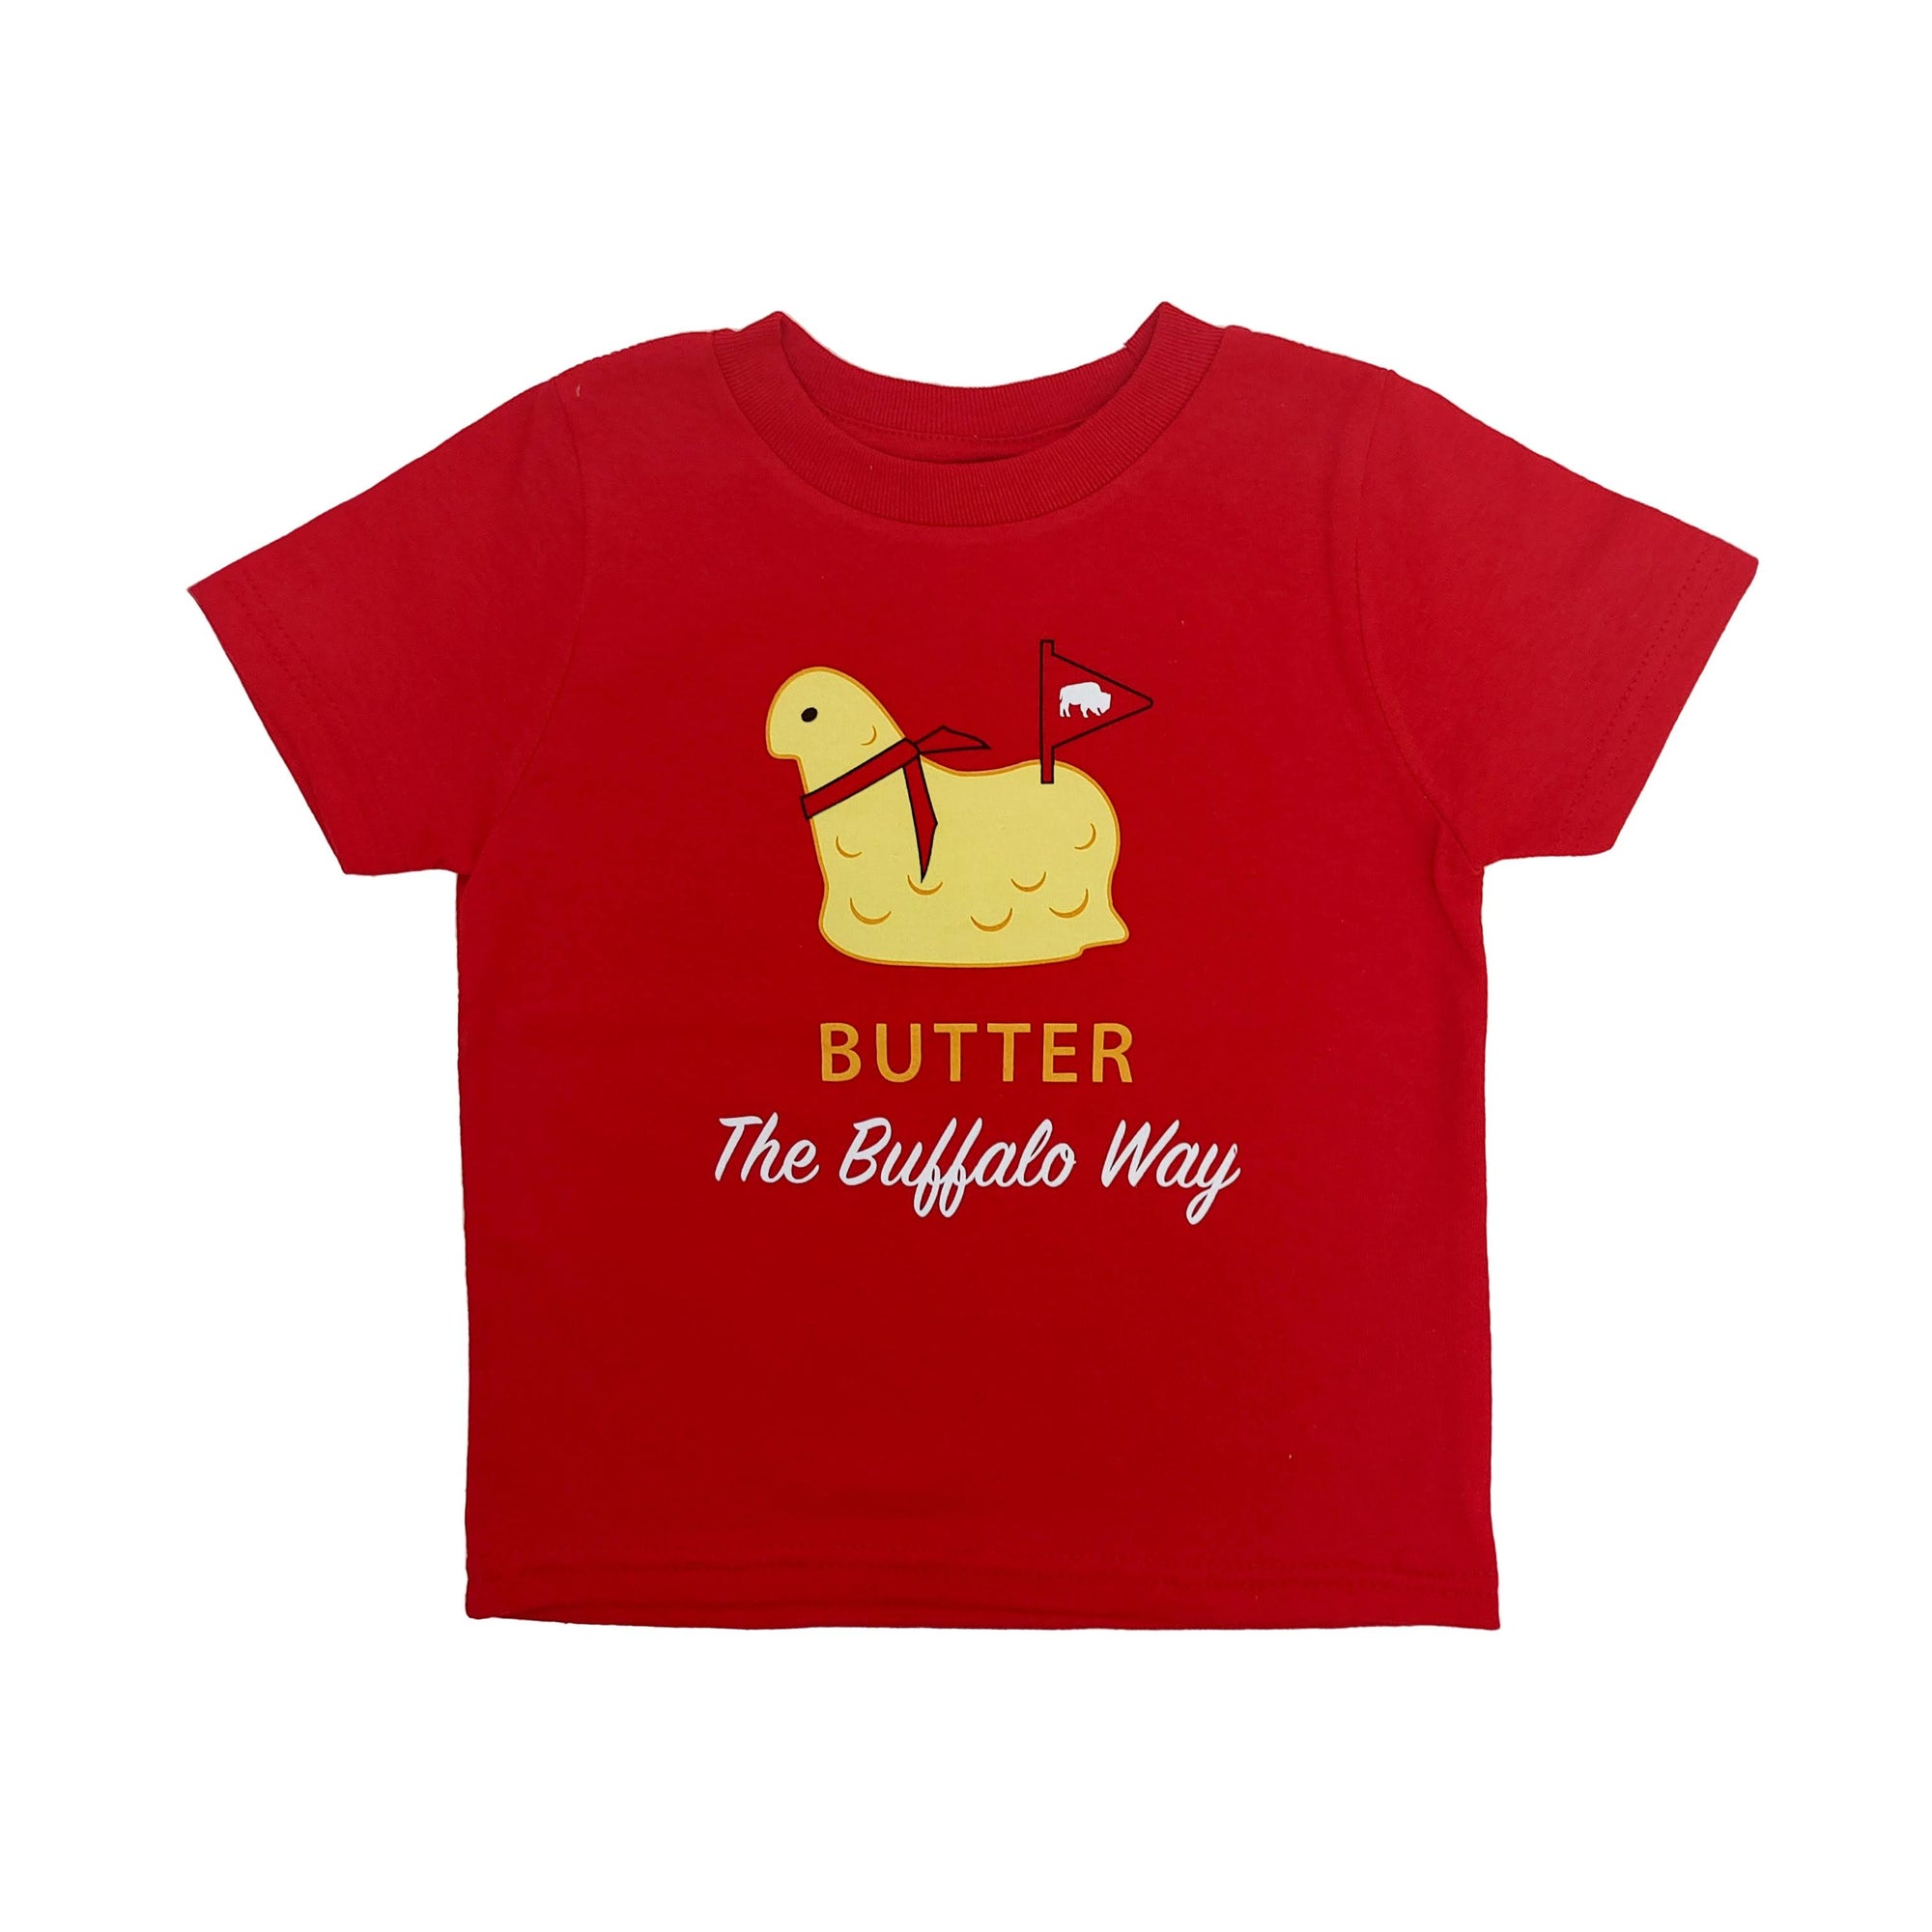 bflo store buffalo ny butter lamb the buffalo way toddler tshirt